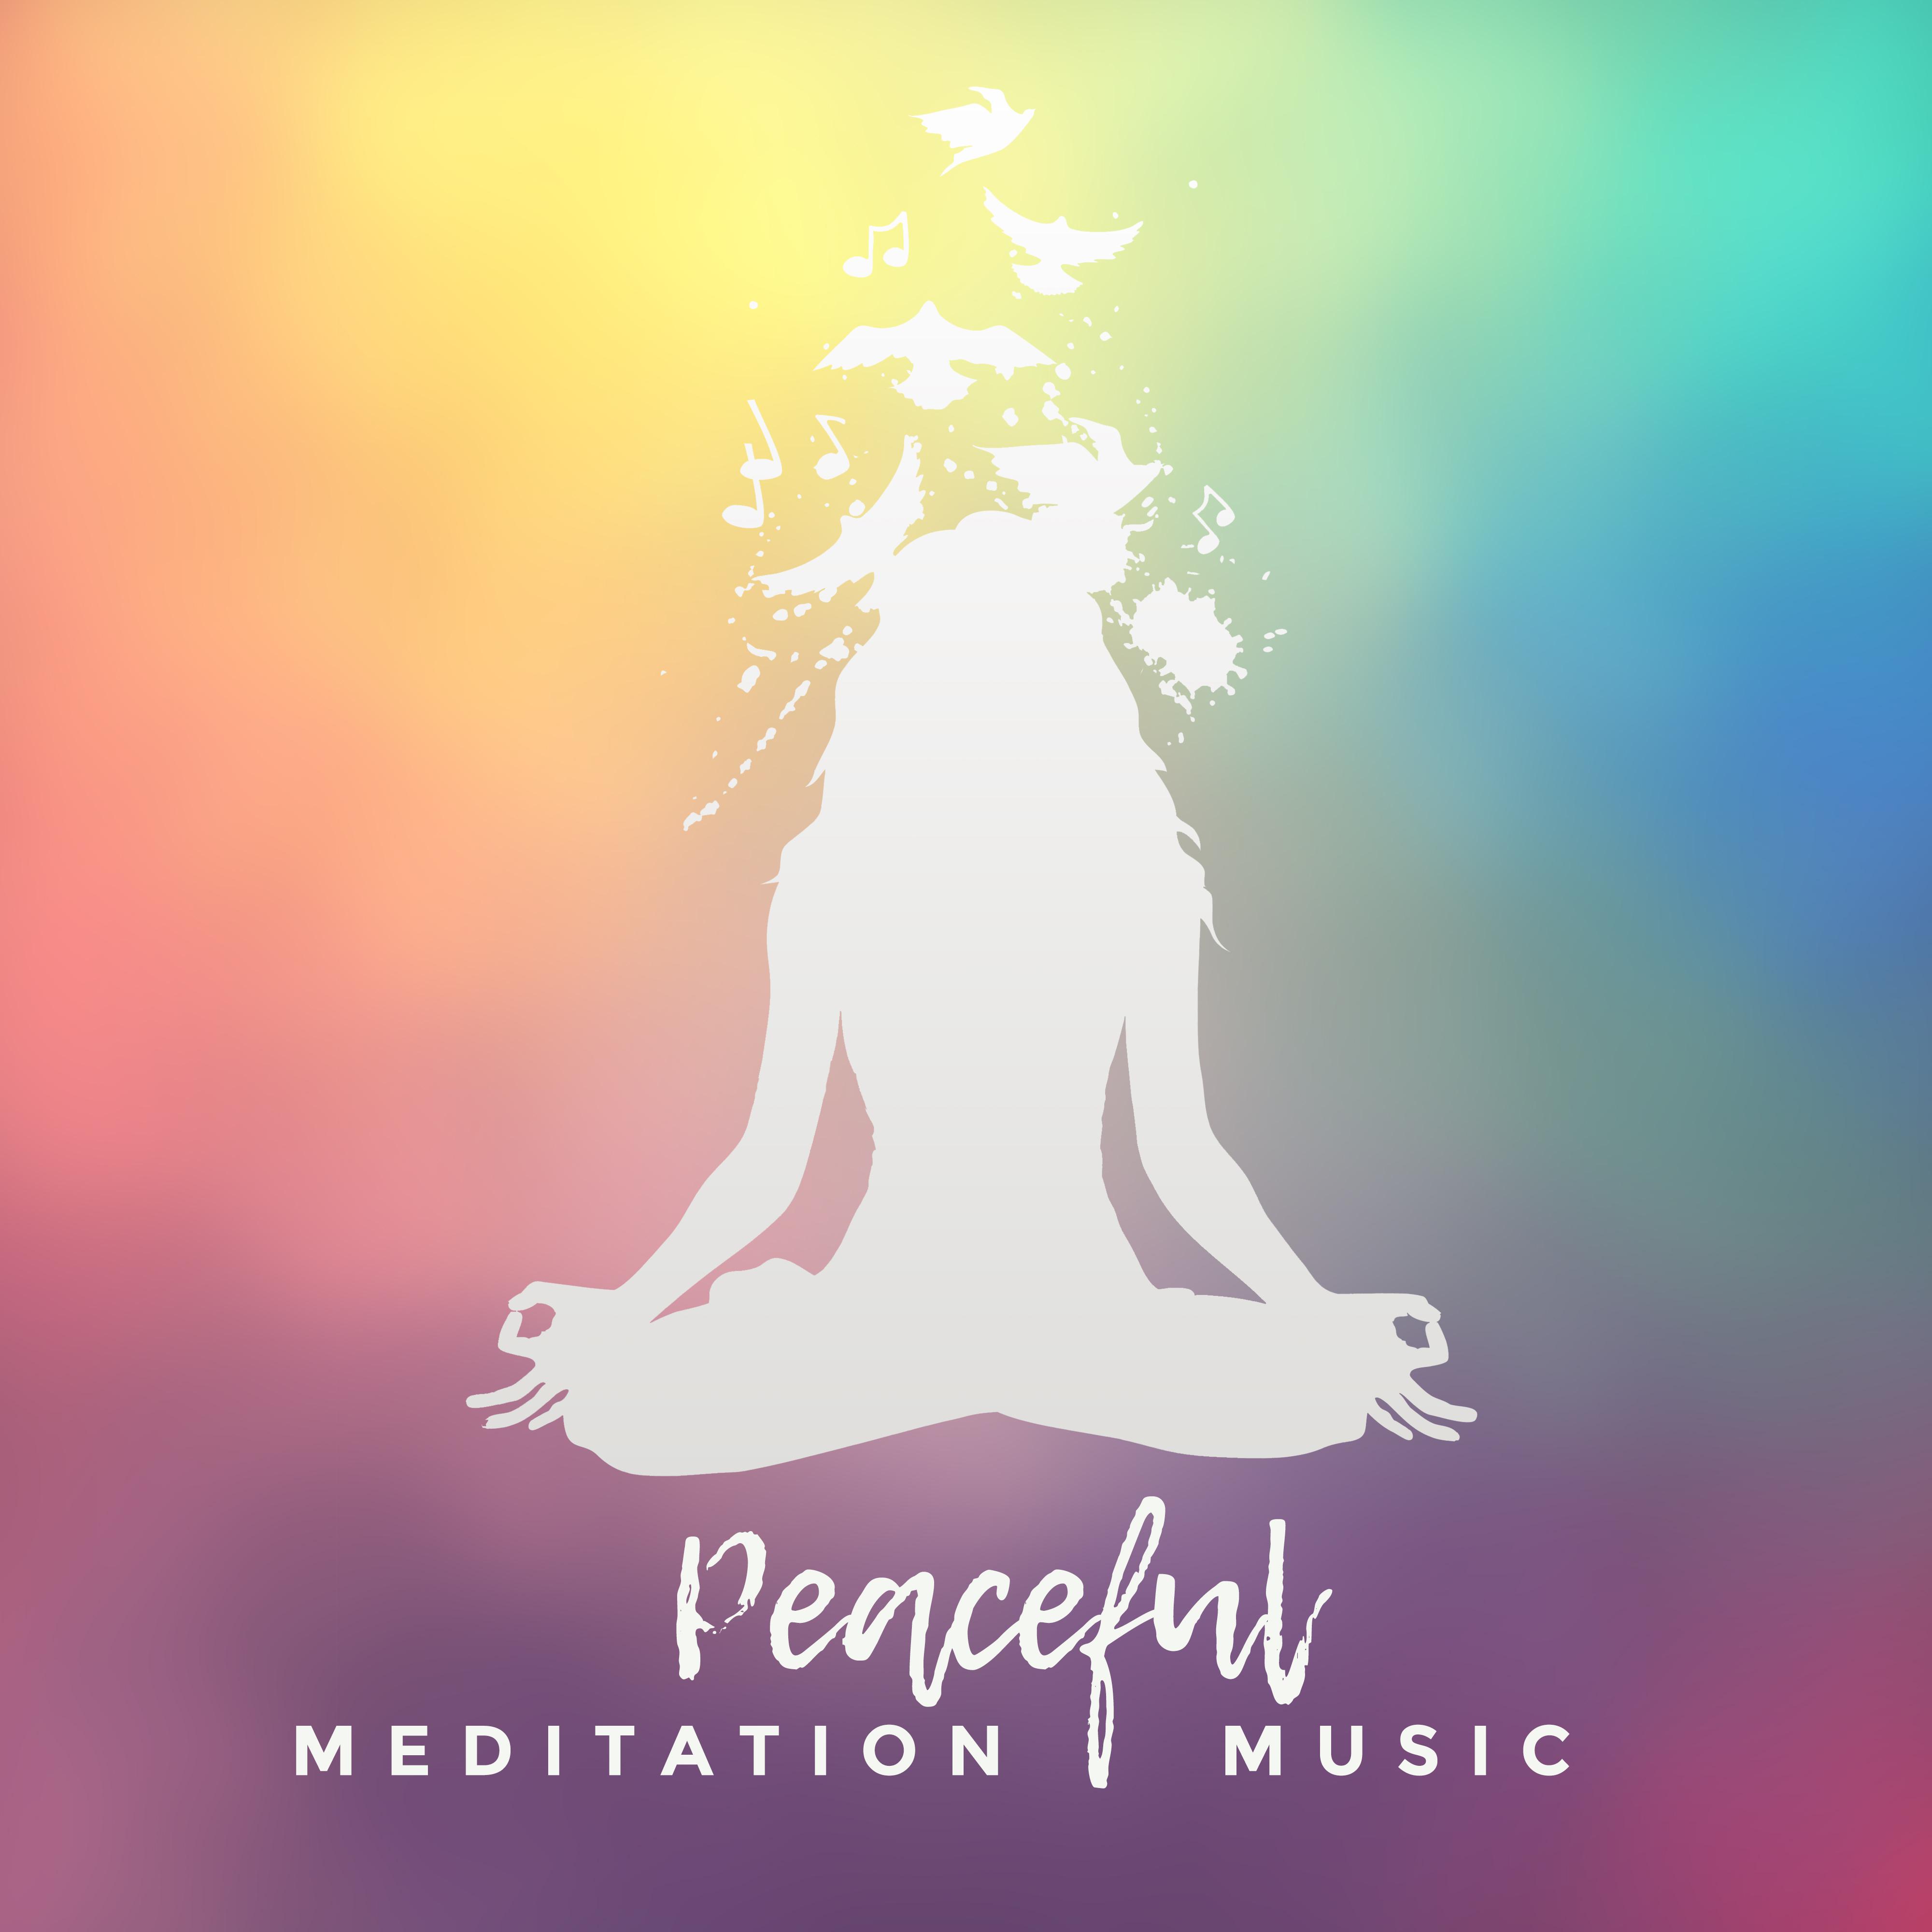 Peaceful Meditation Music